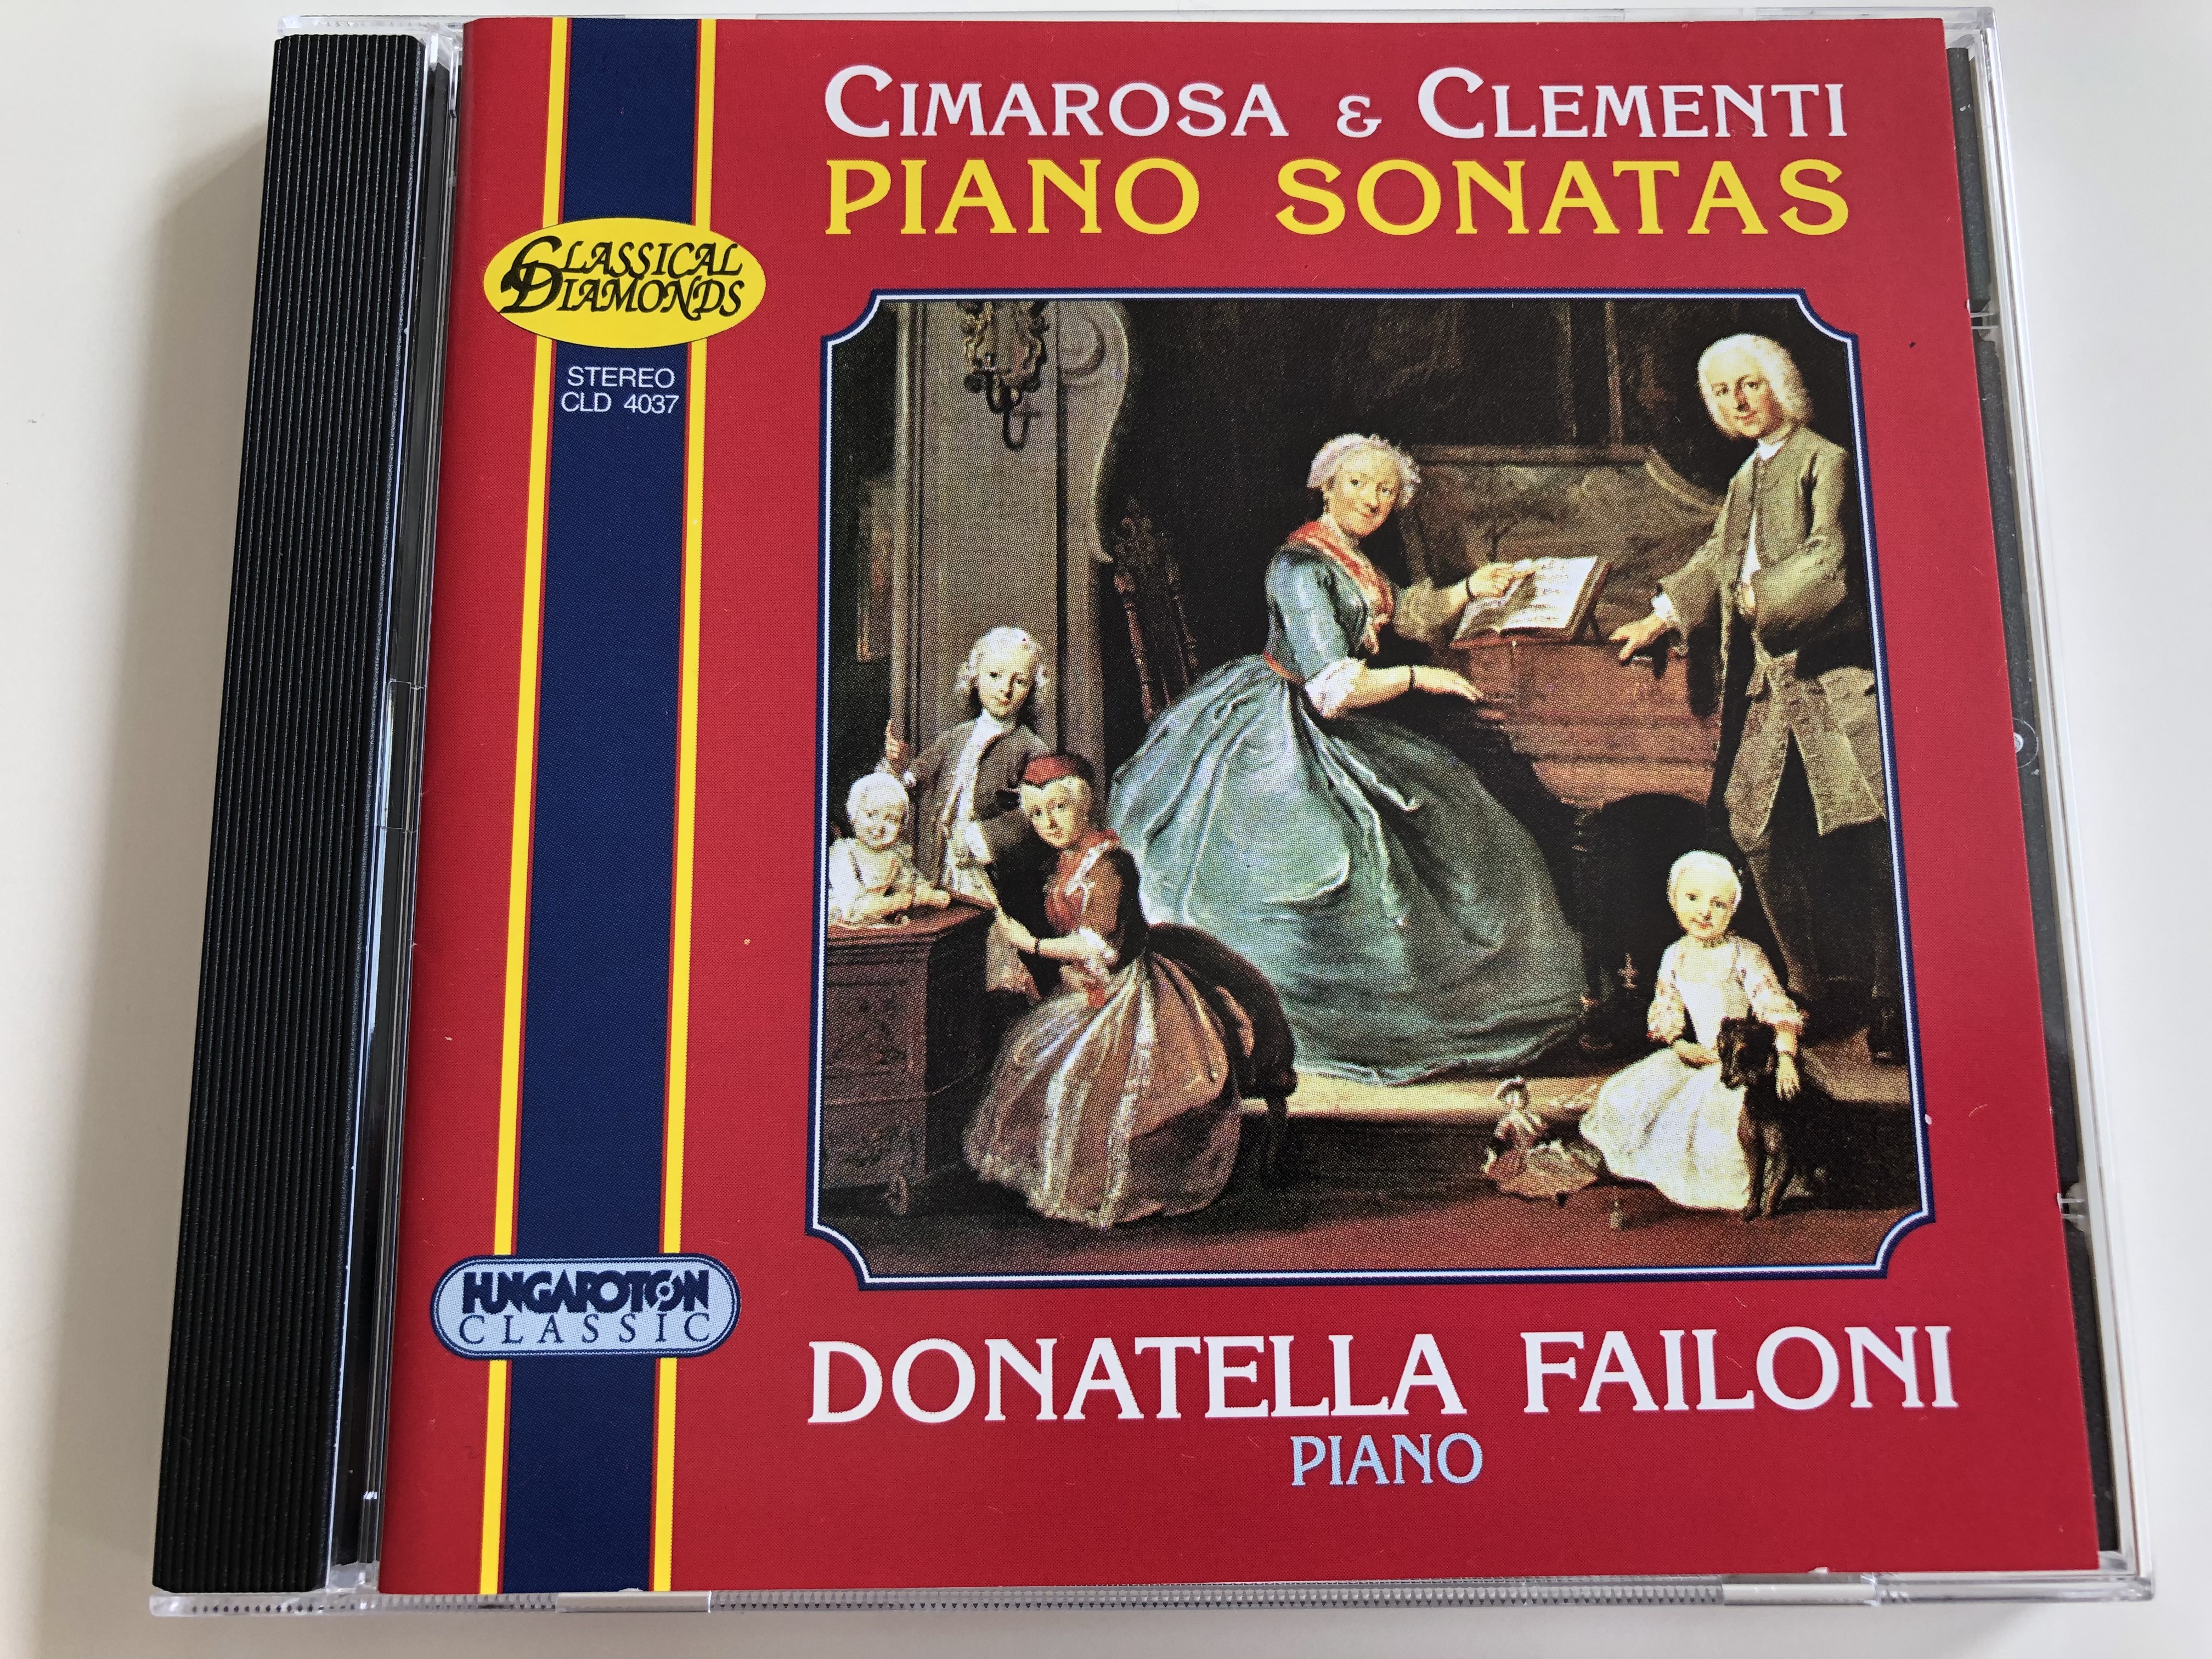 cimarosa-clementi-piano-sonatas-donatella-failoni-piano-hungaroton-classic-classical-diamonds-cld-4037-audip-cd-1998-1-.jpg